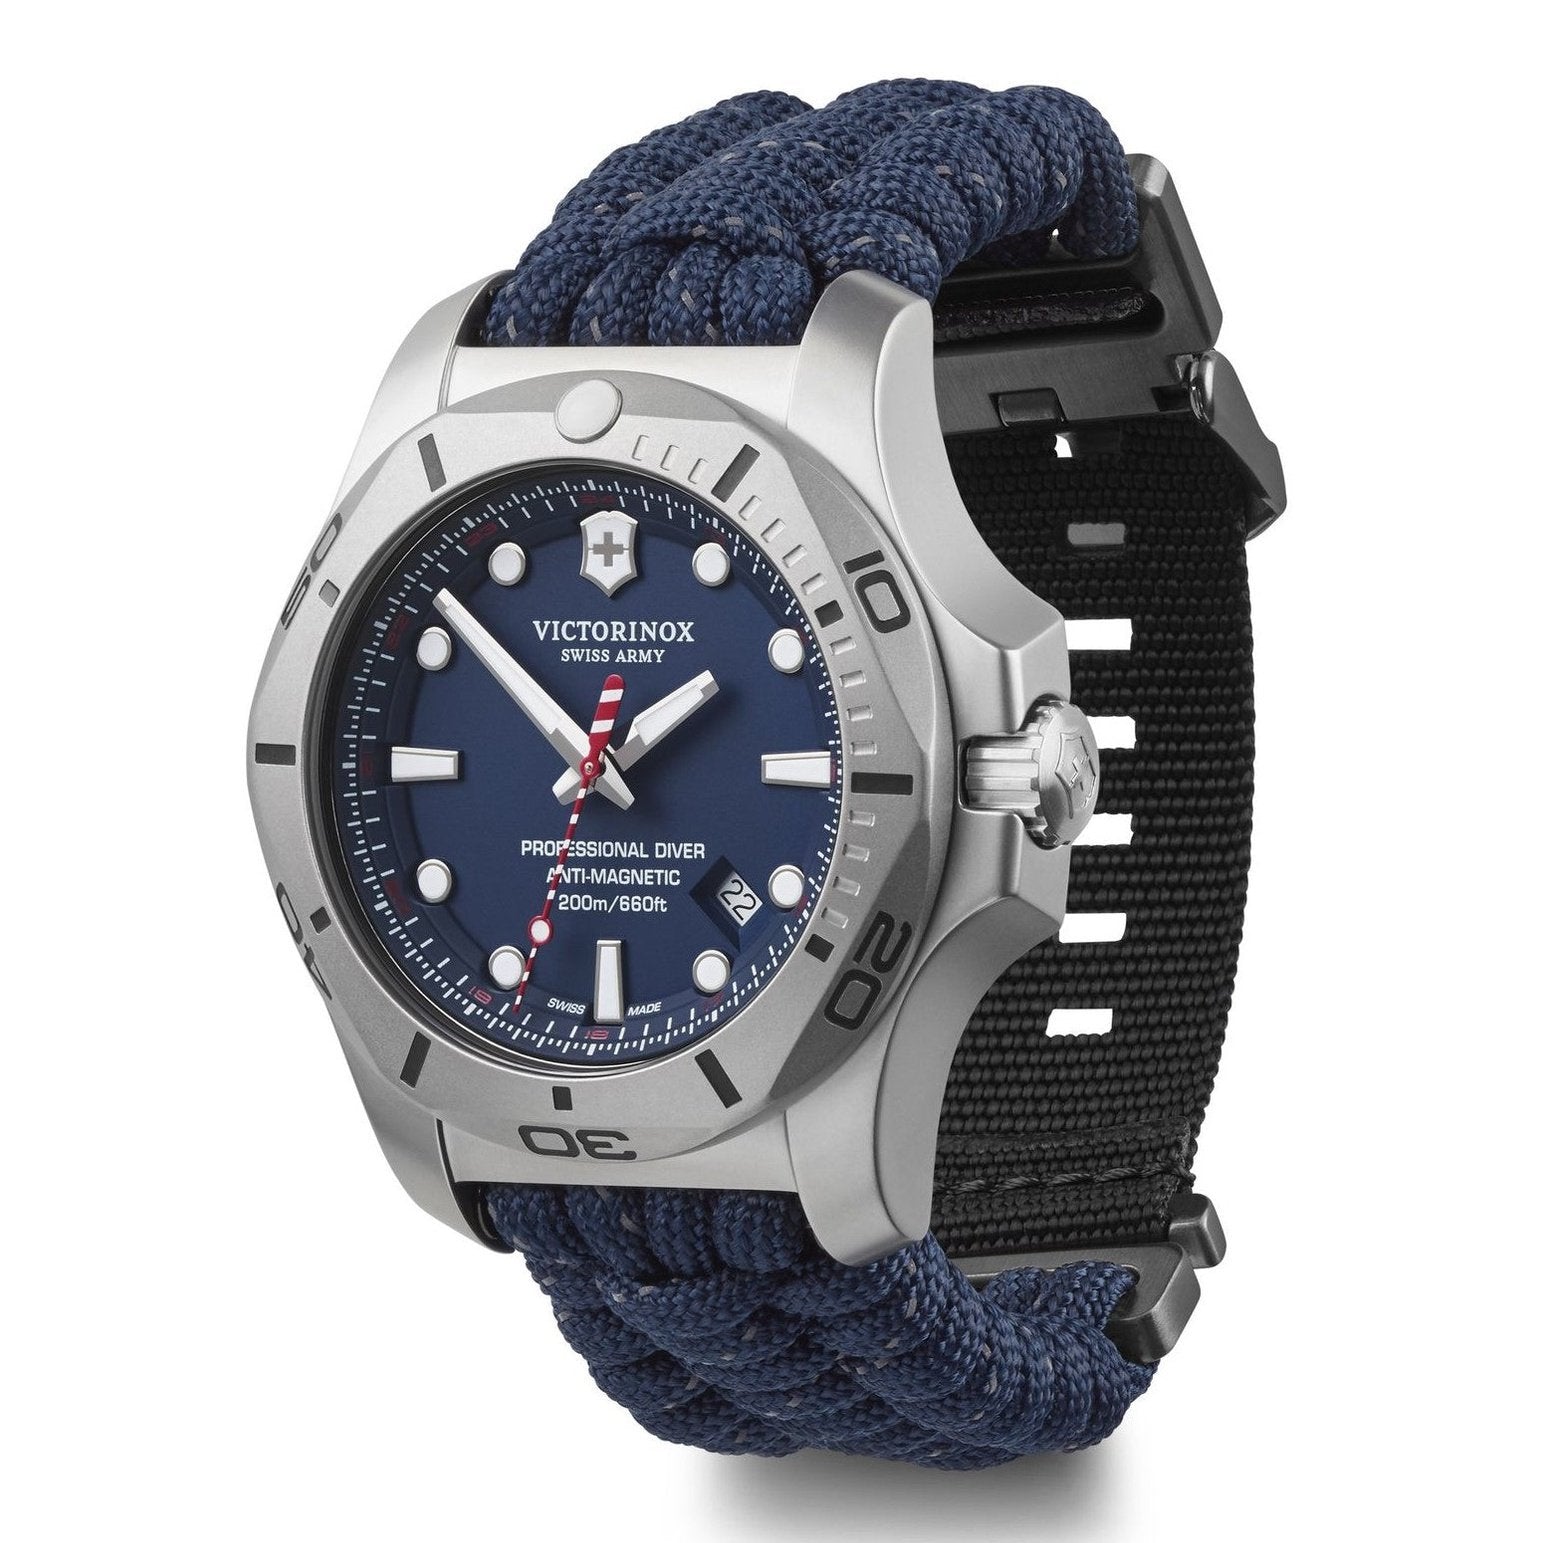 Men's I.N.O.X. Professional Diver Watch 241843 Victorinox Swiss Army